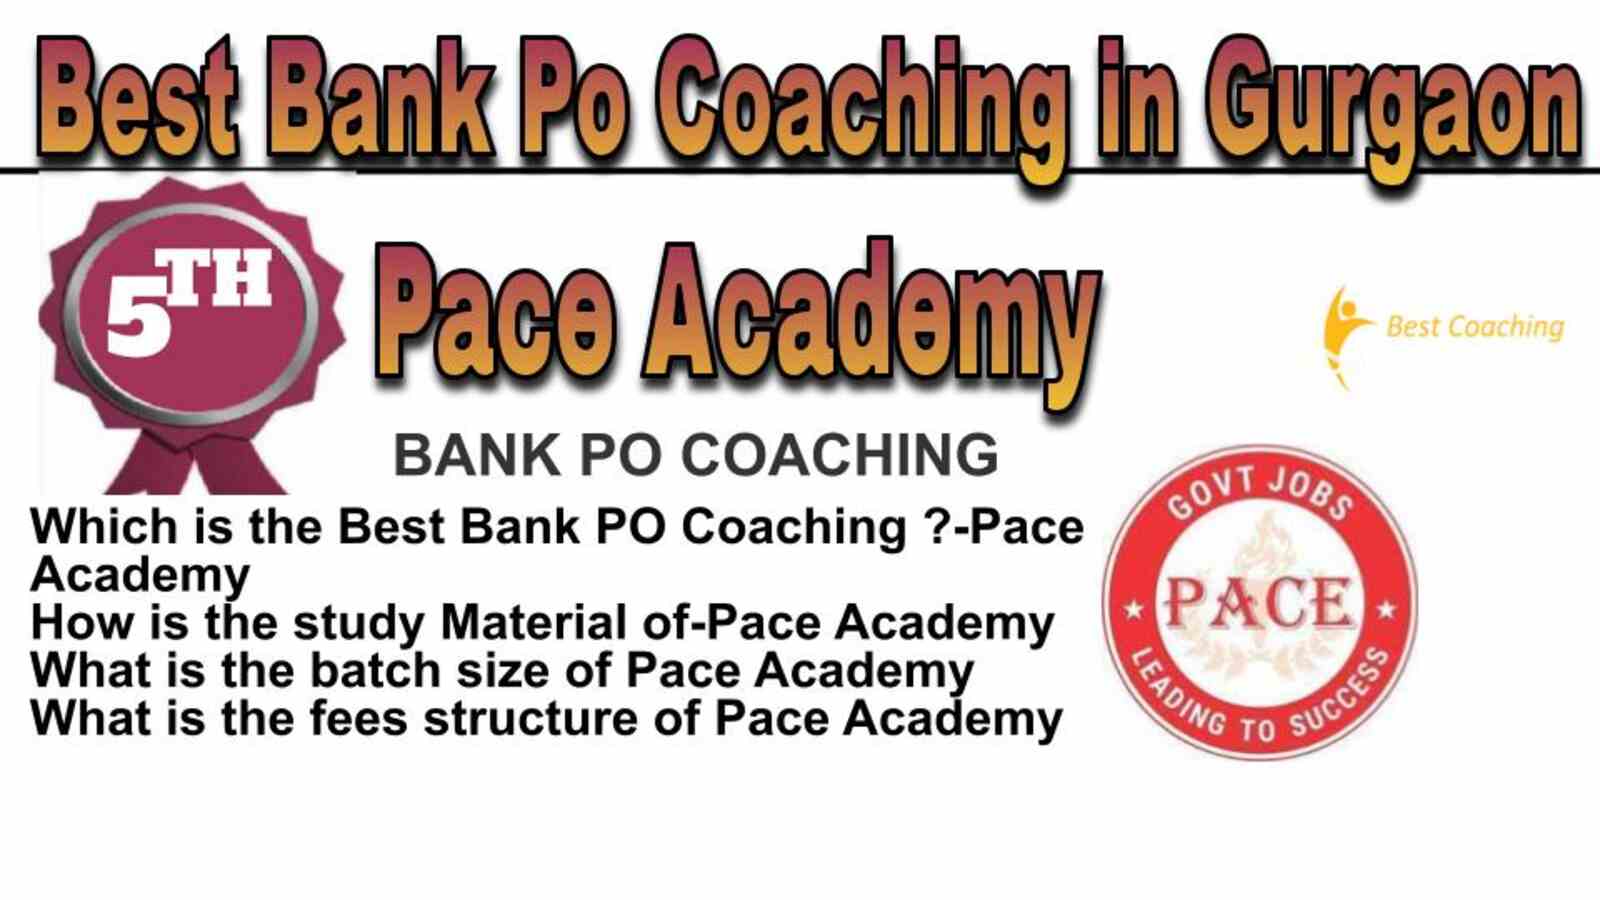 Rank 5 best bank Po coaching in Gurgaon